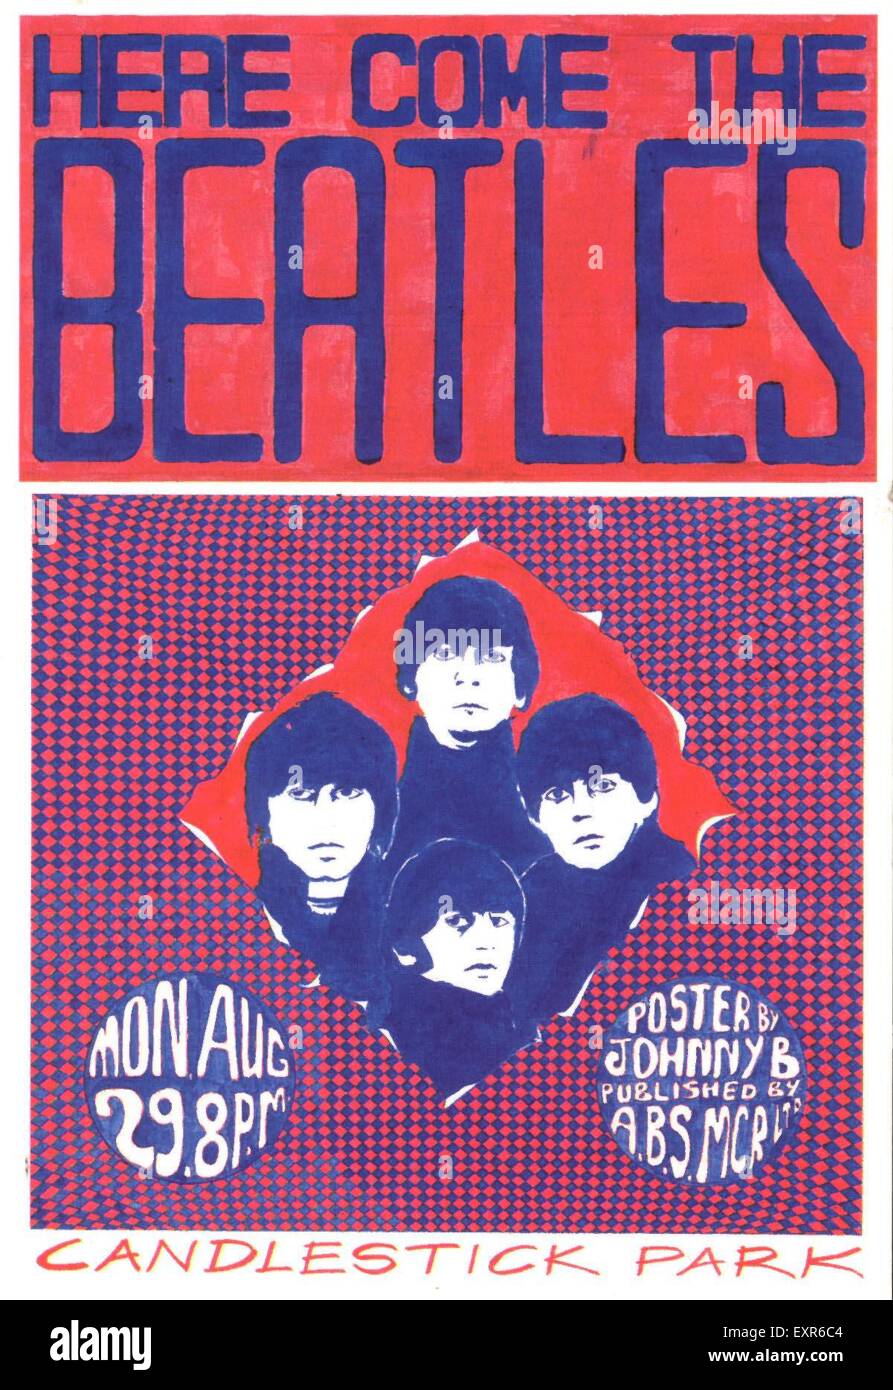 1960er Jahre UK hier kommen die Beatles Poster Stockfoto